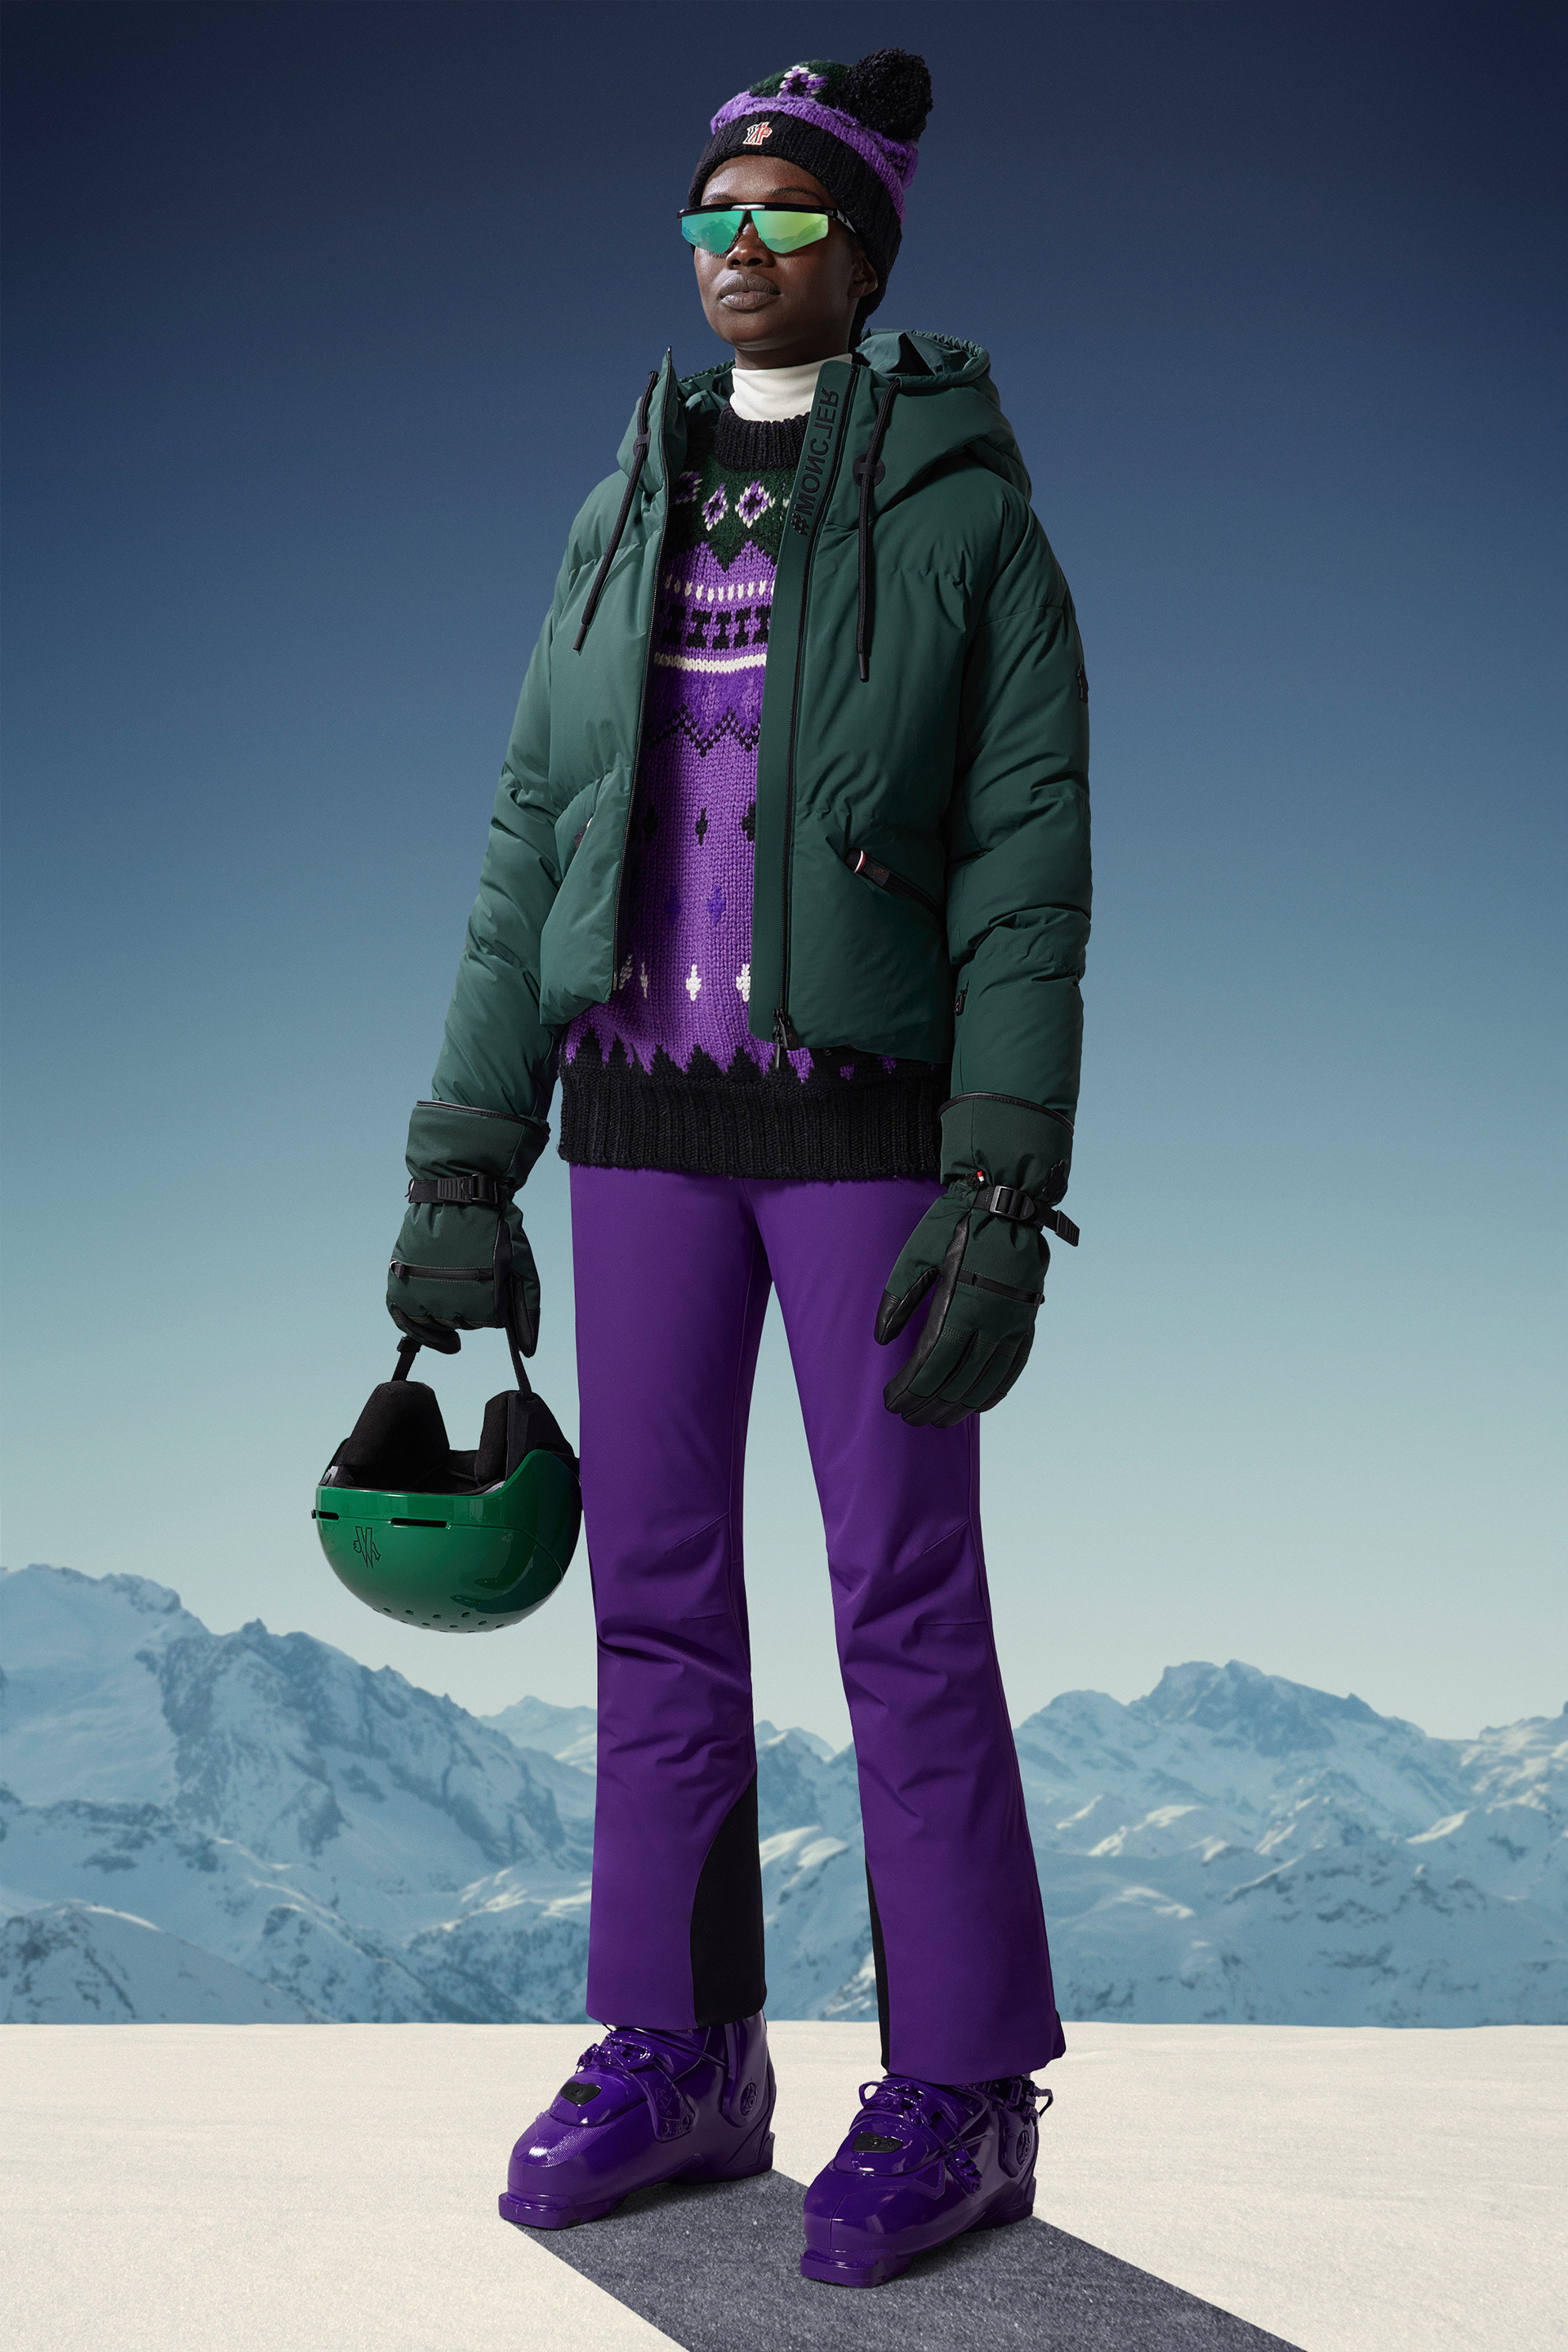 Moncler Grenoble PrimaLoft-Insulated Ski Pants, Pants